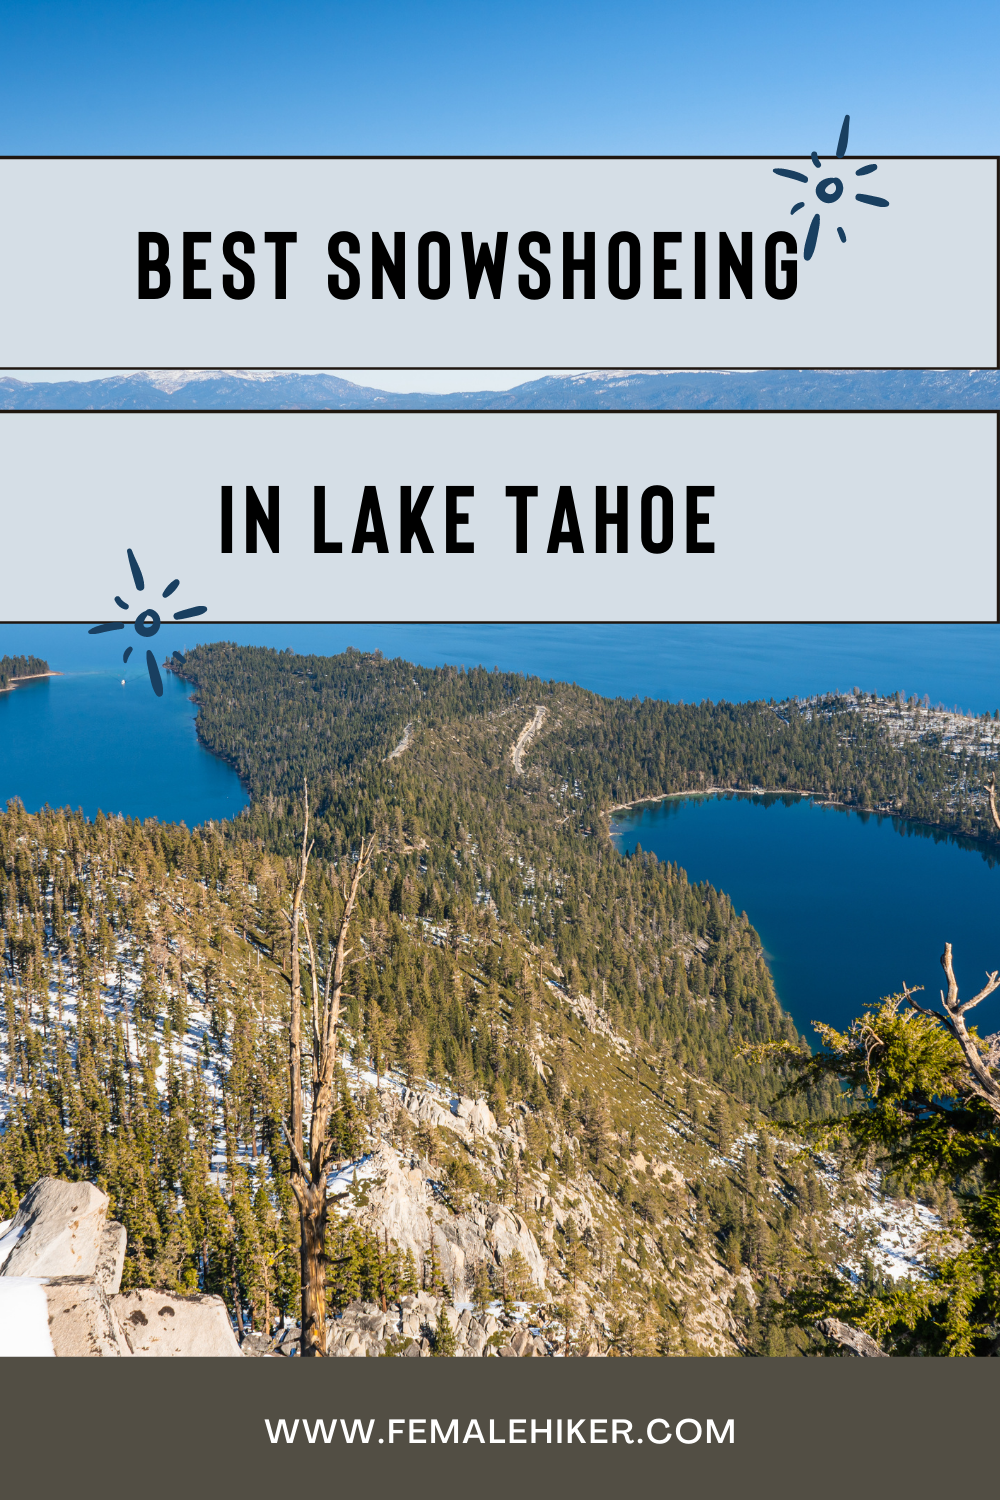 Snowshoeing in Lake Tahoe